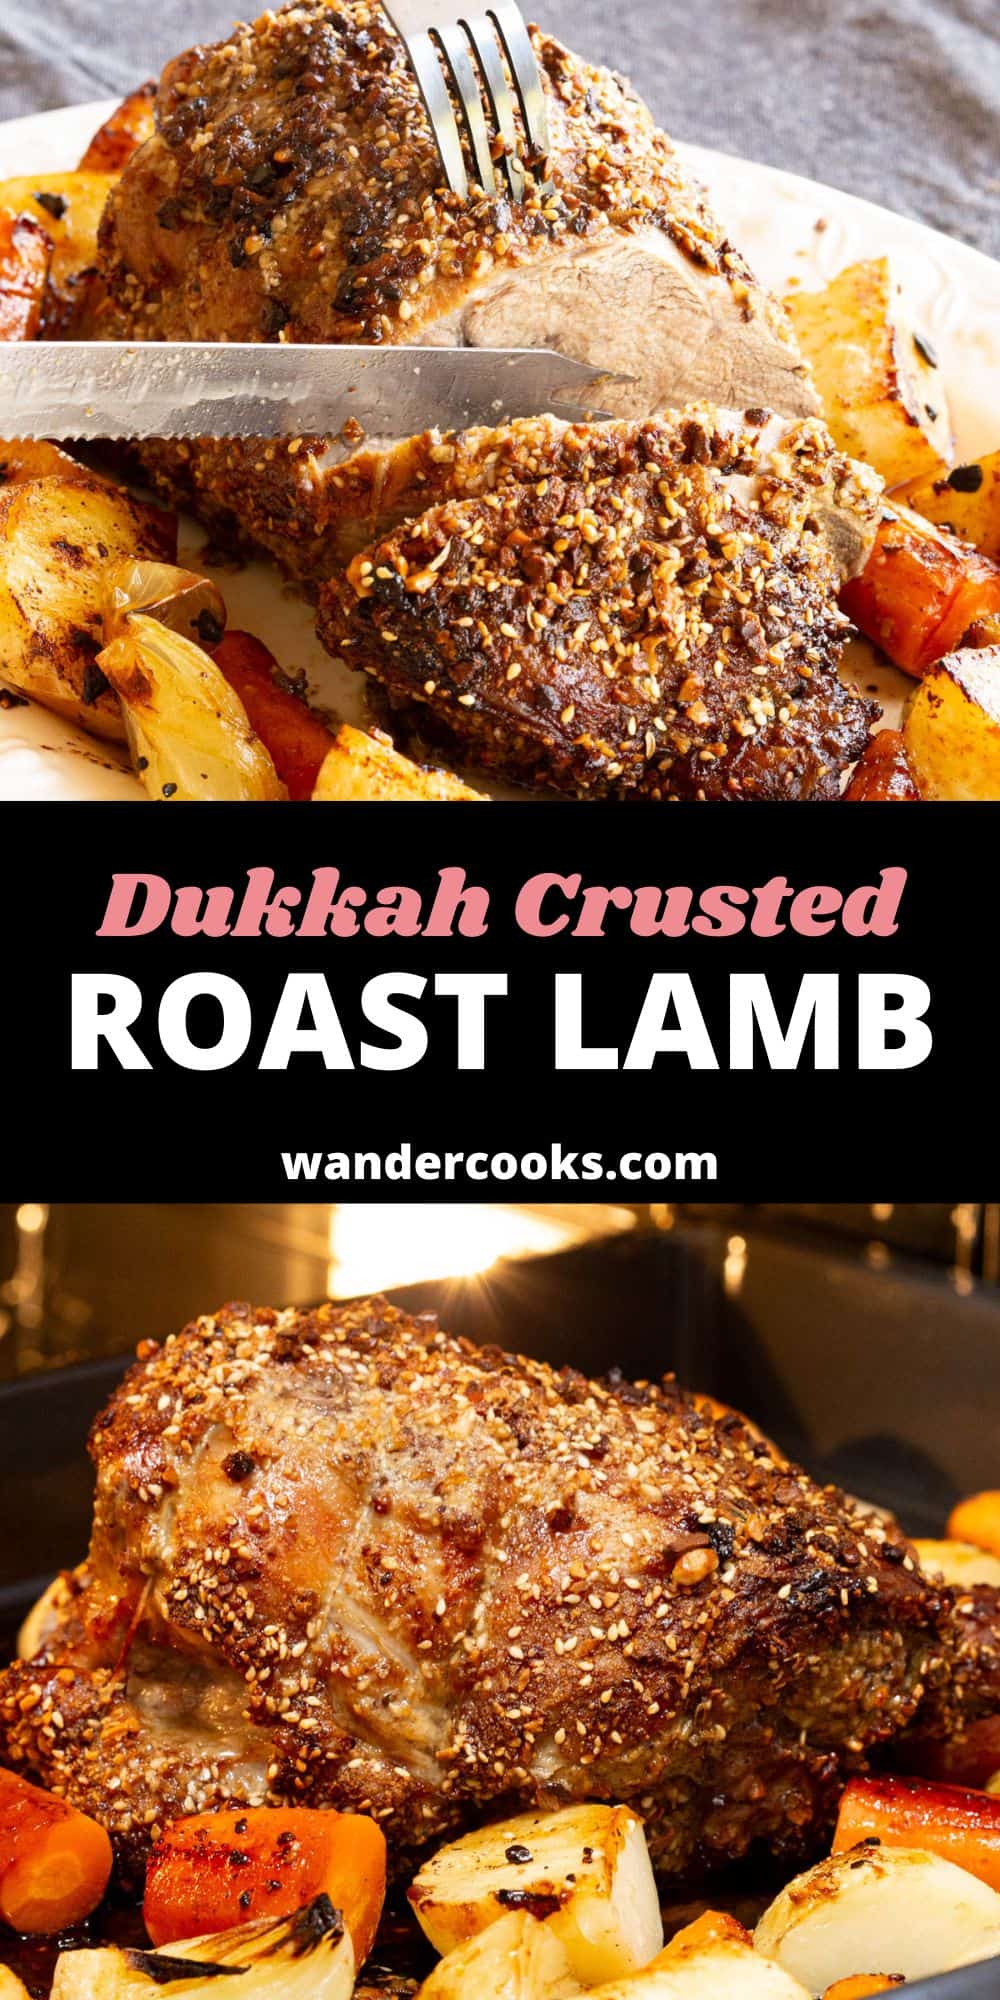 Rolled Lamb Roast with Dukkah Crust